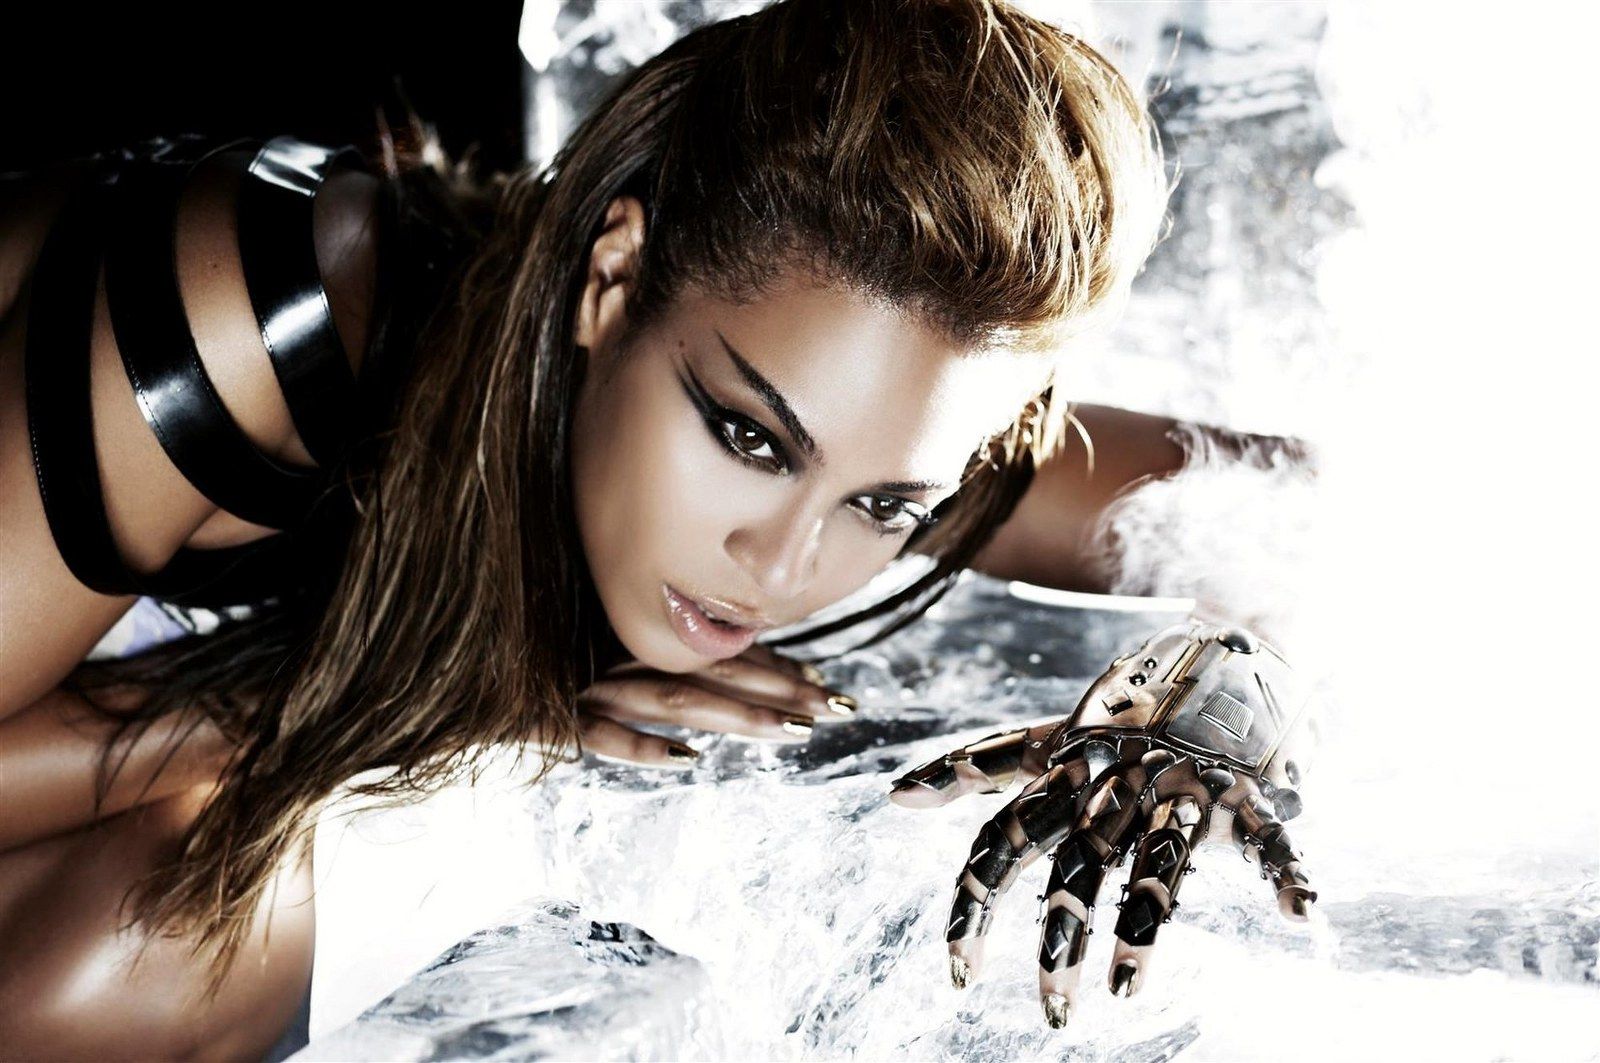 Beyonce Singer Wallpaper 1600×1063 | wallpapers55.com - Best ...